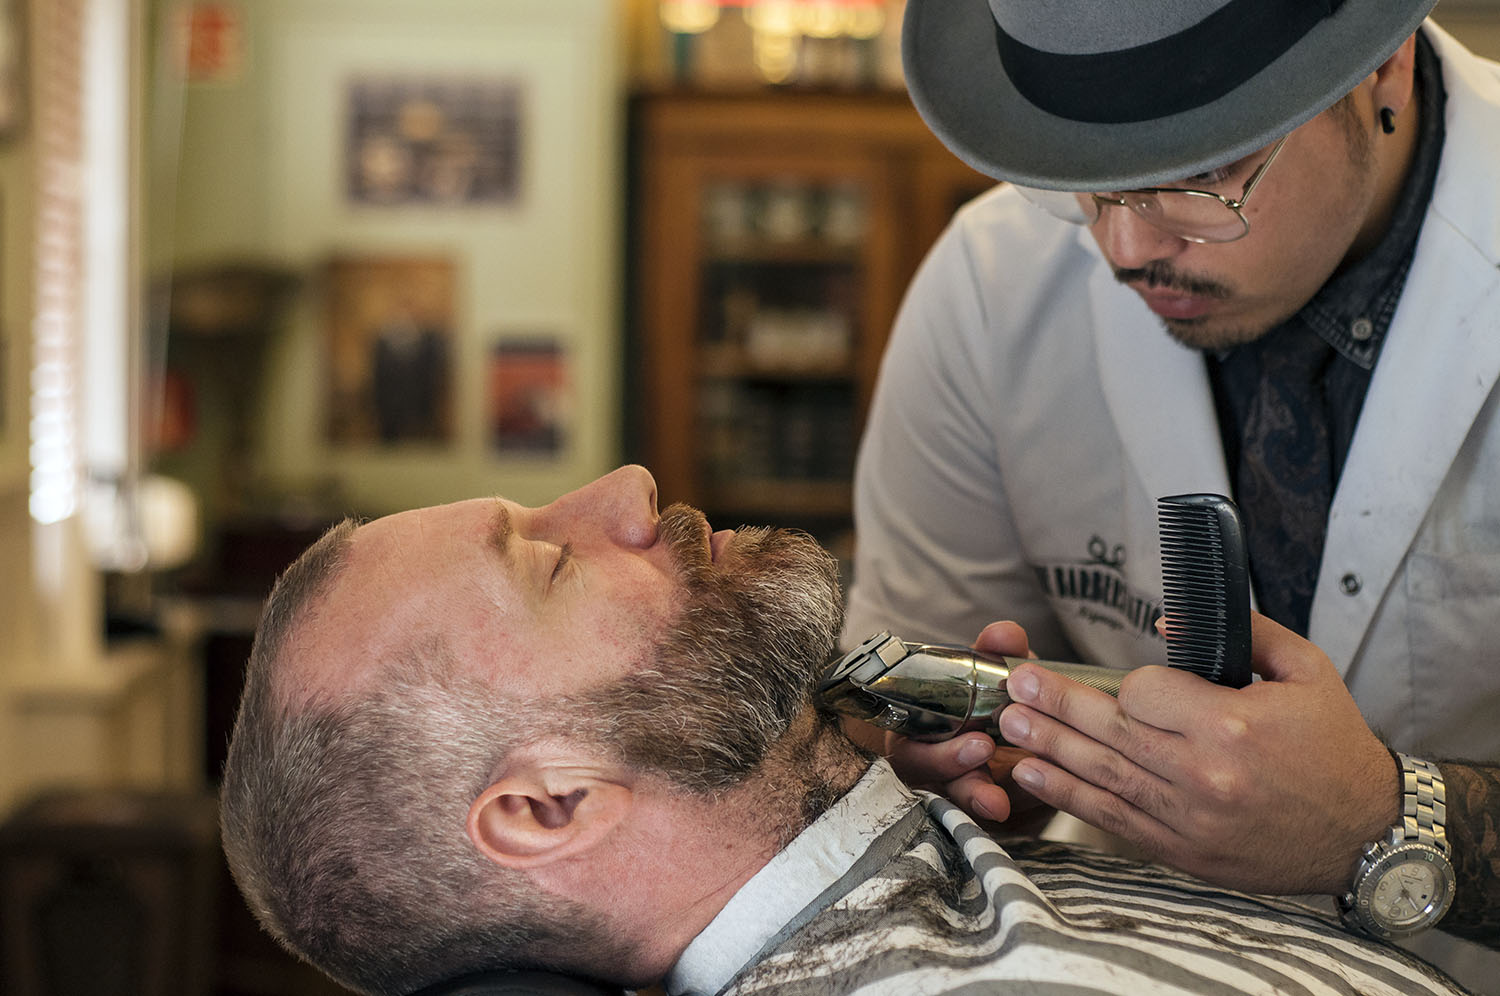 L’uomo dal barbiere (Nijmegen, Paesi Bassi)